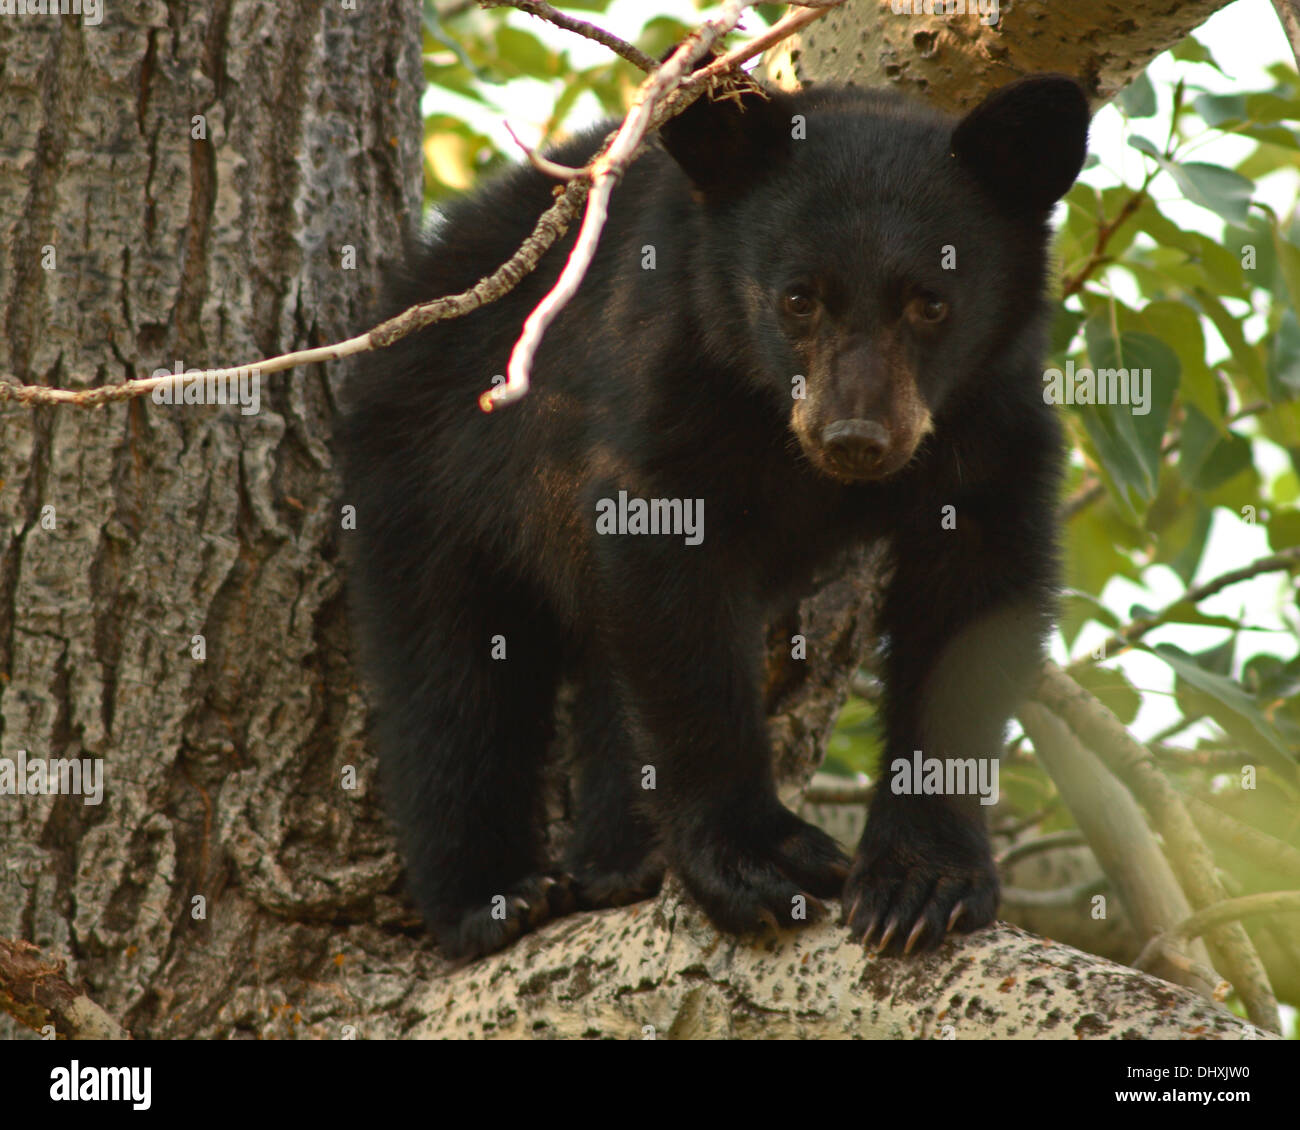 A Black Bear Cub resting on a branch. Stock Photo